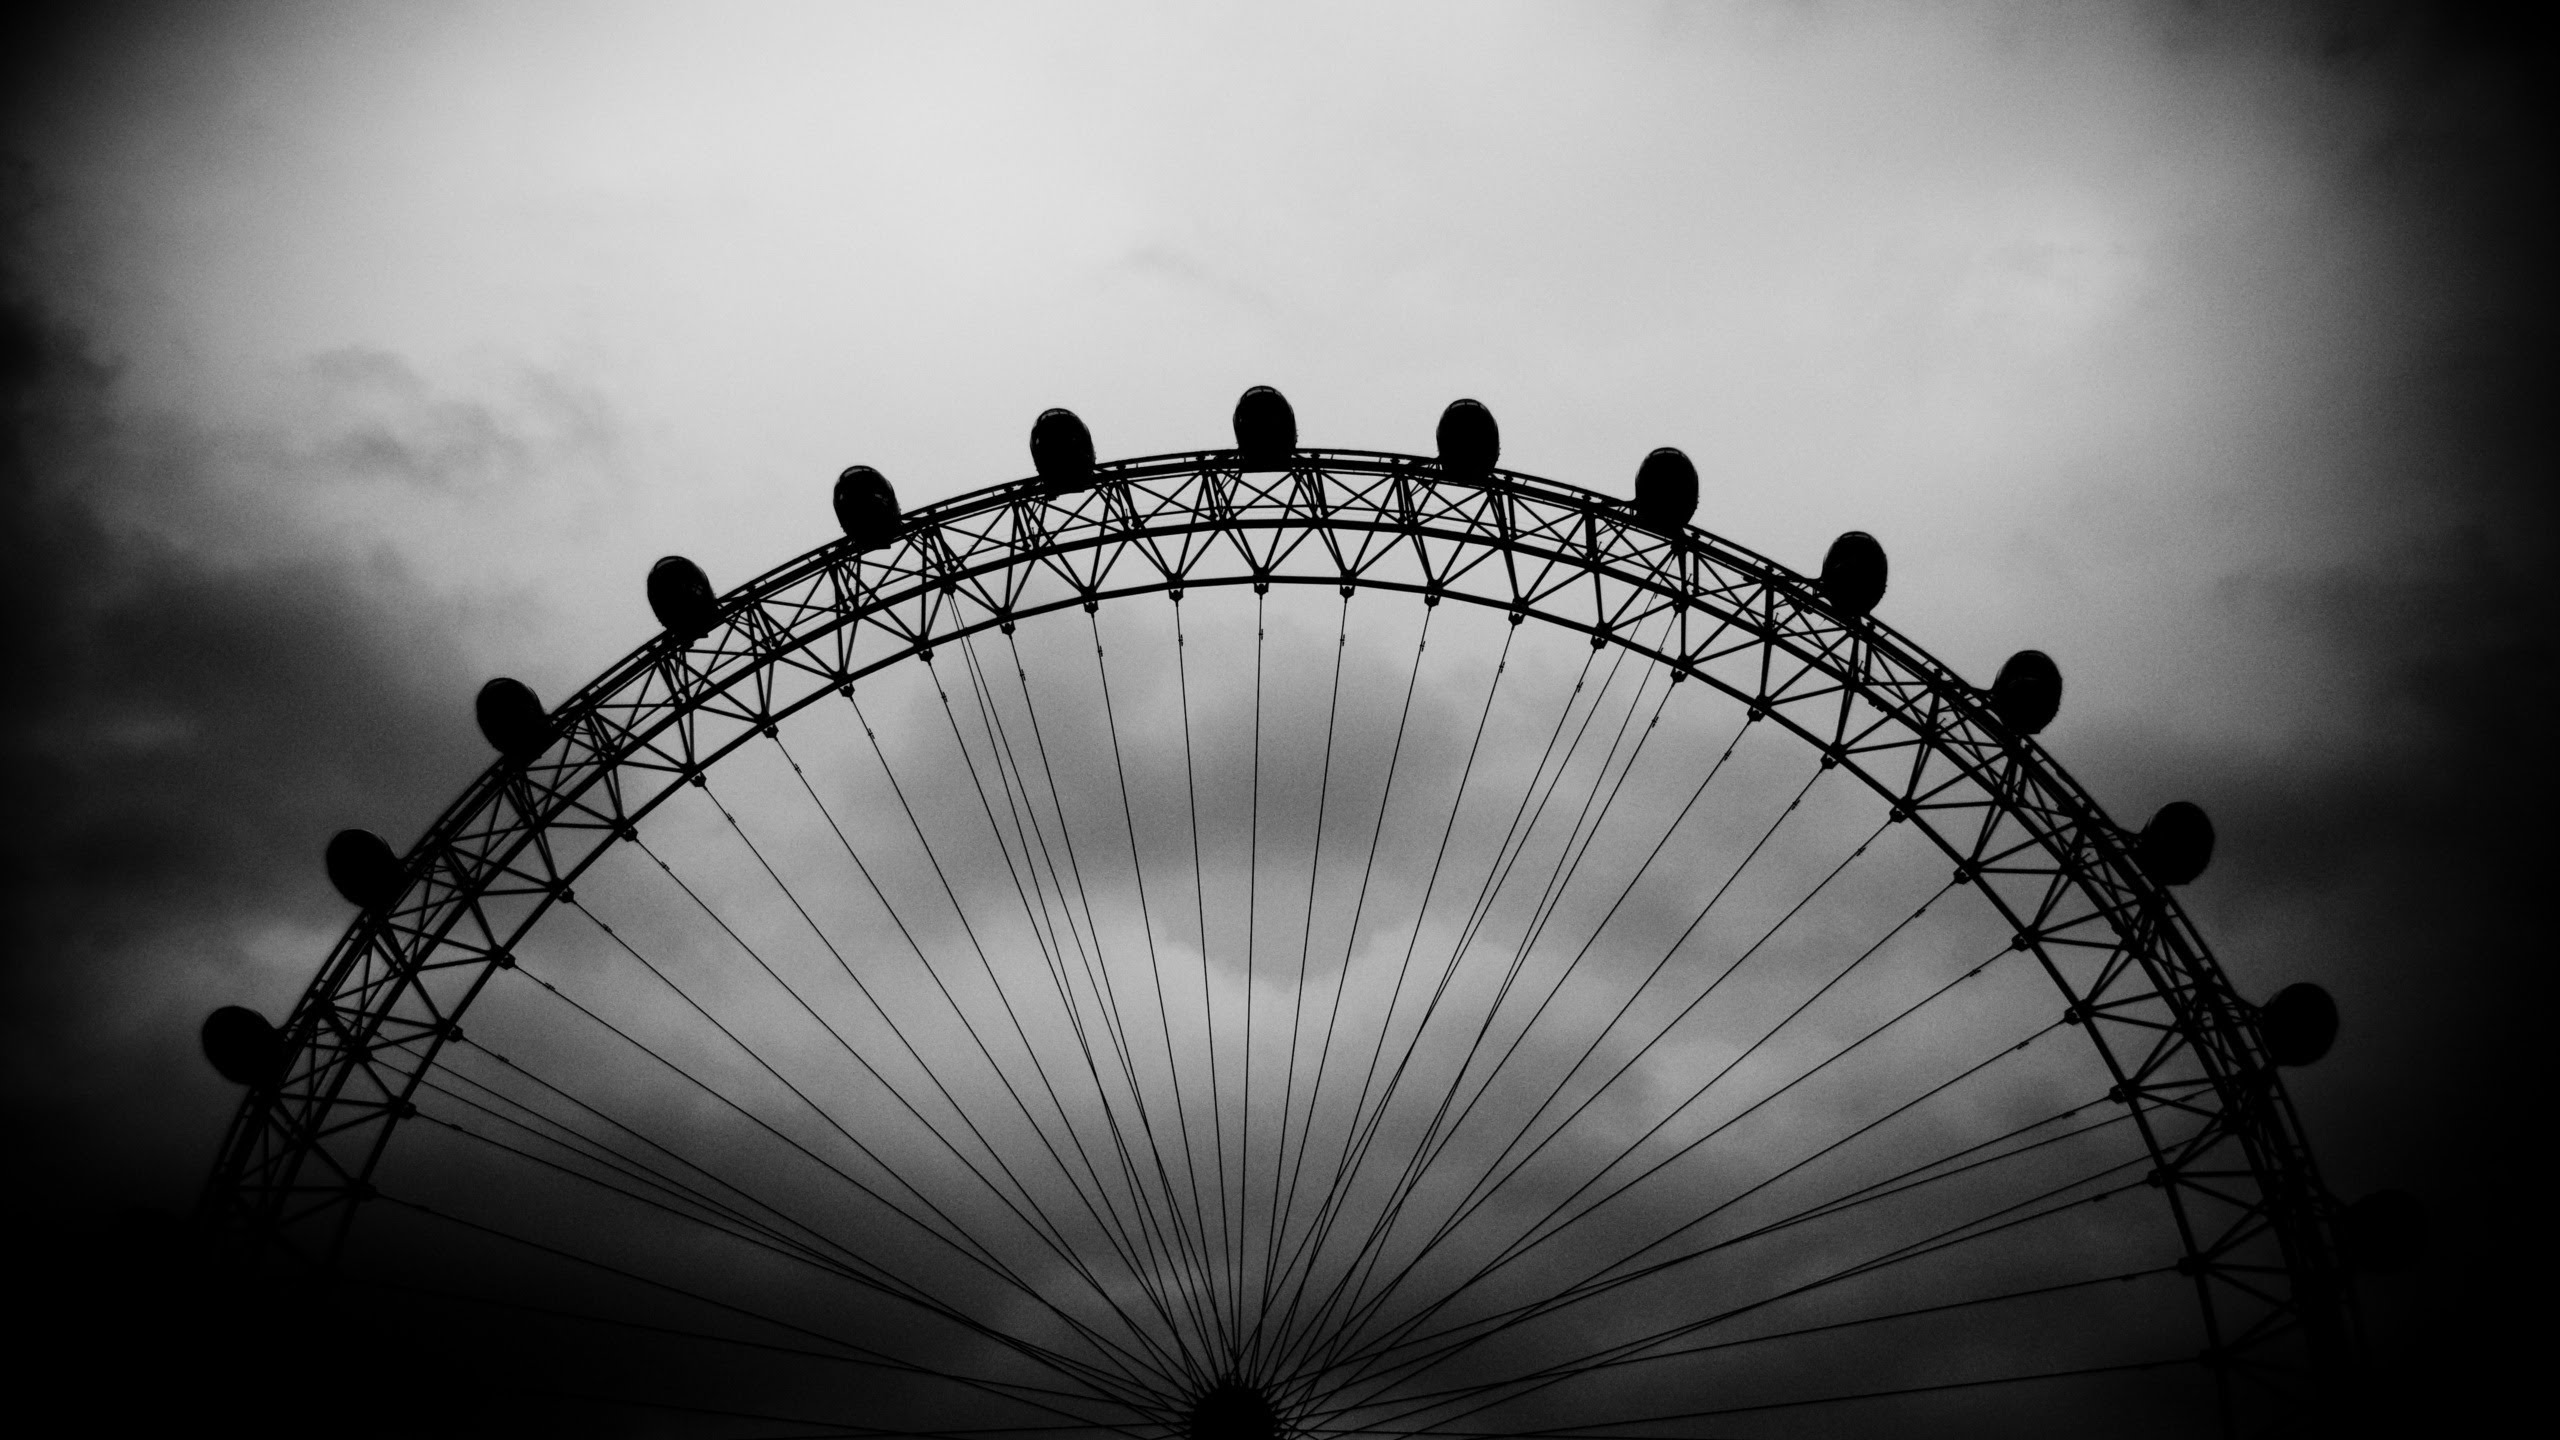 london background tumblr black and white